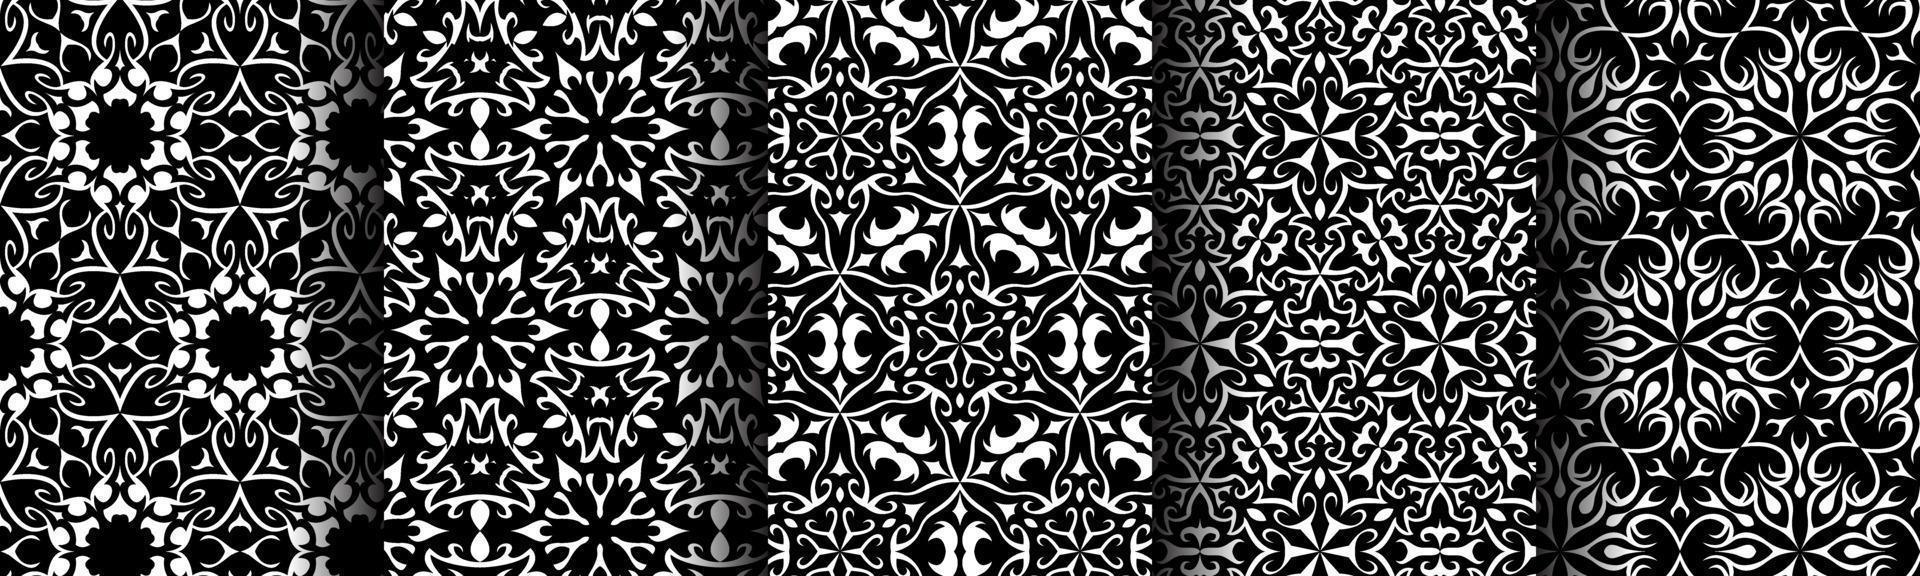 black and white pattern ethnic background set bundle vector